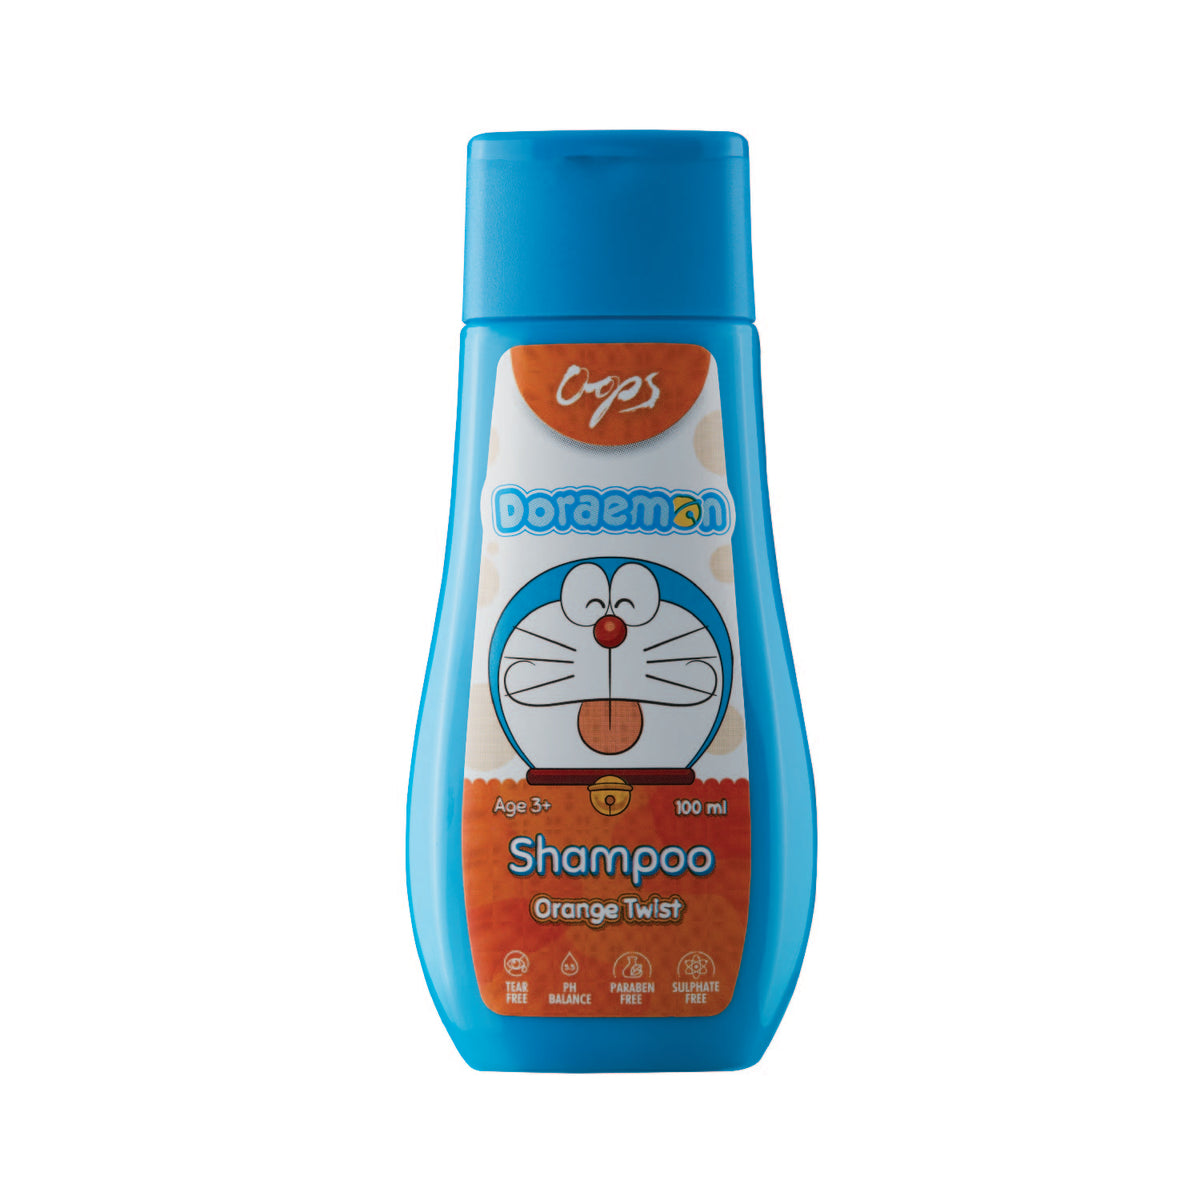 Oops Doraemon Shampoo - Orange Twist, 100ml : Buy 1 Get 1 Free! Gardenia Cosmotrade LLP